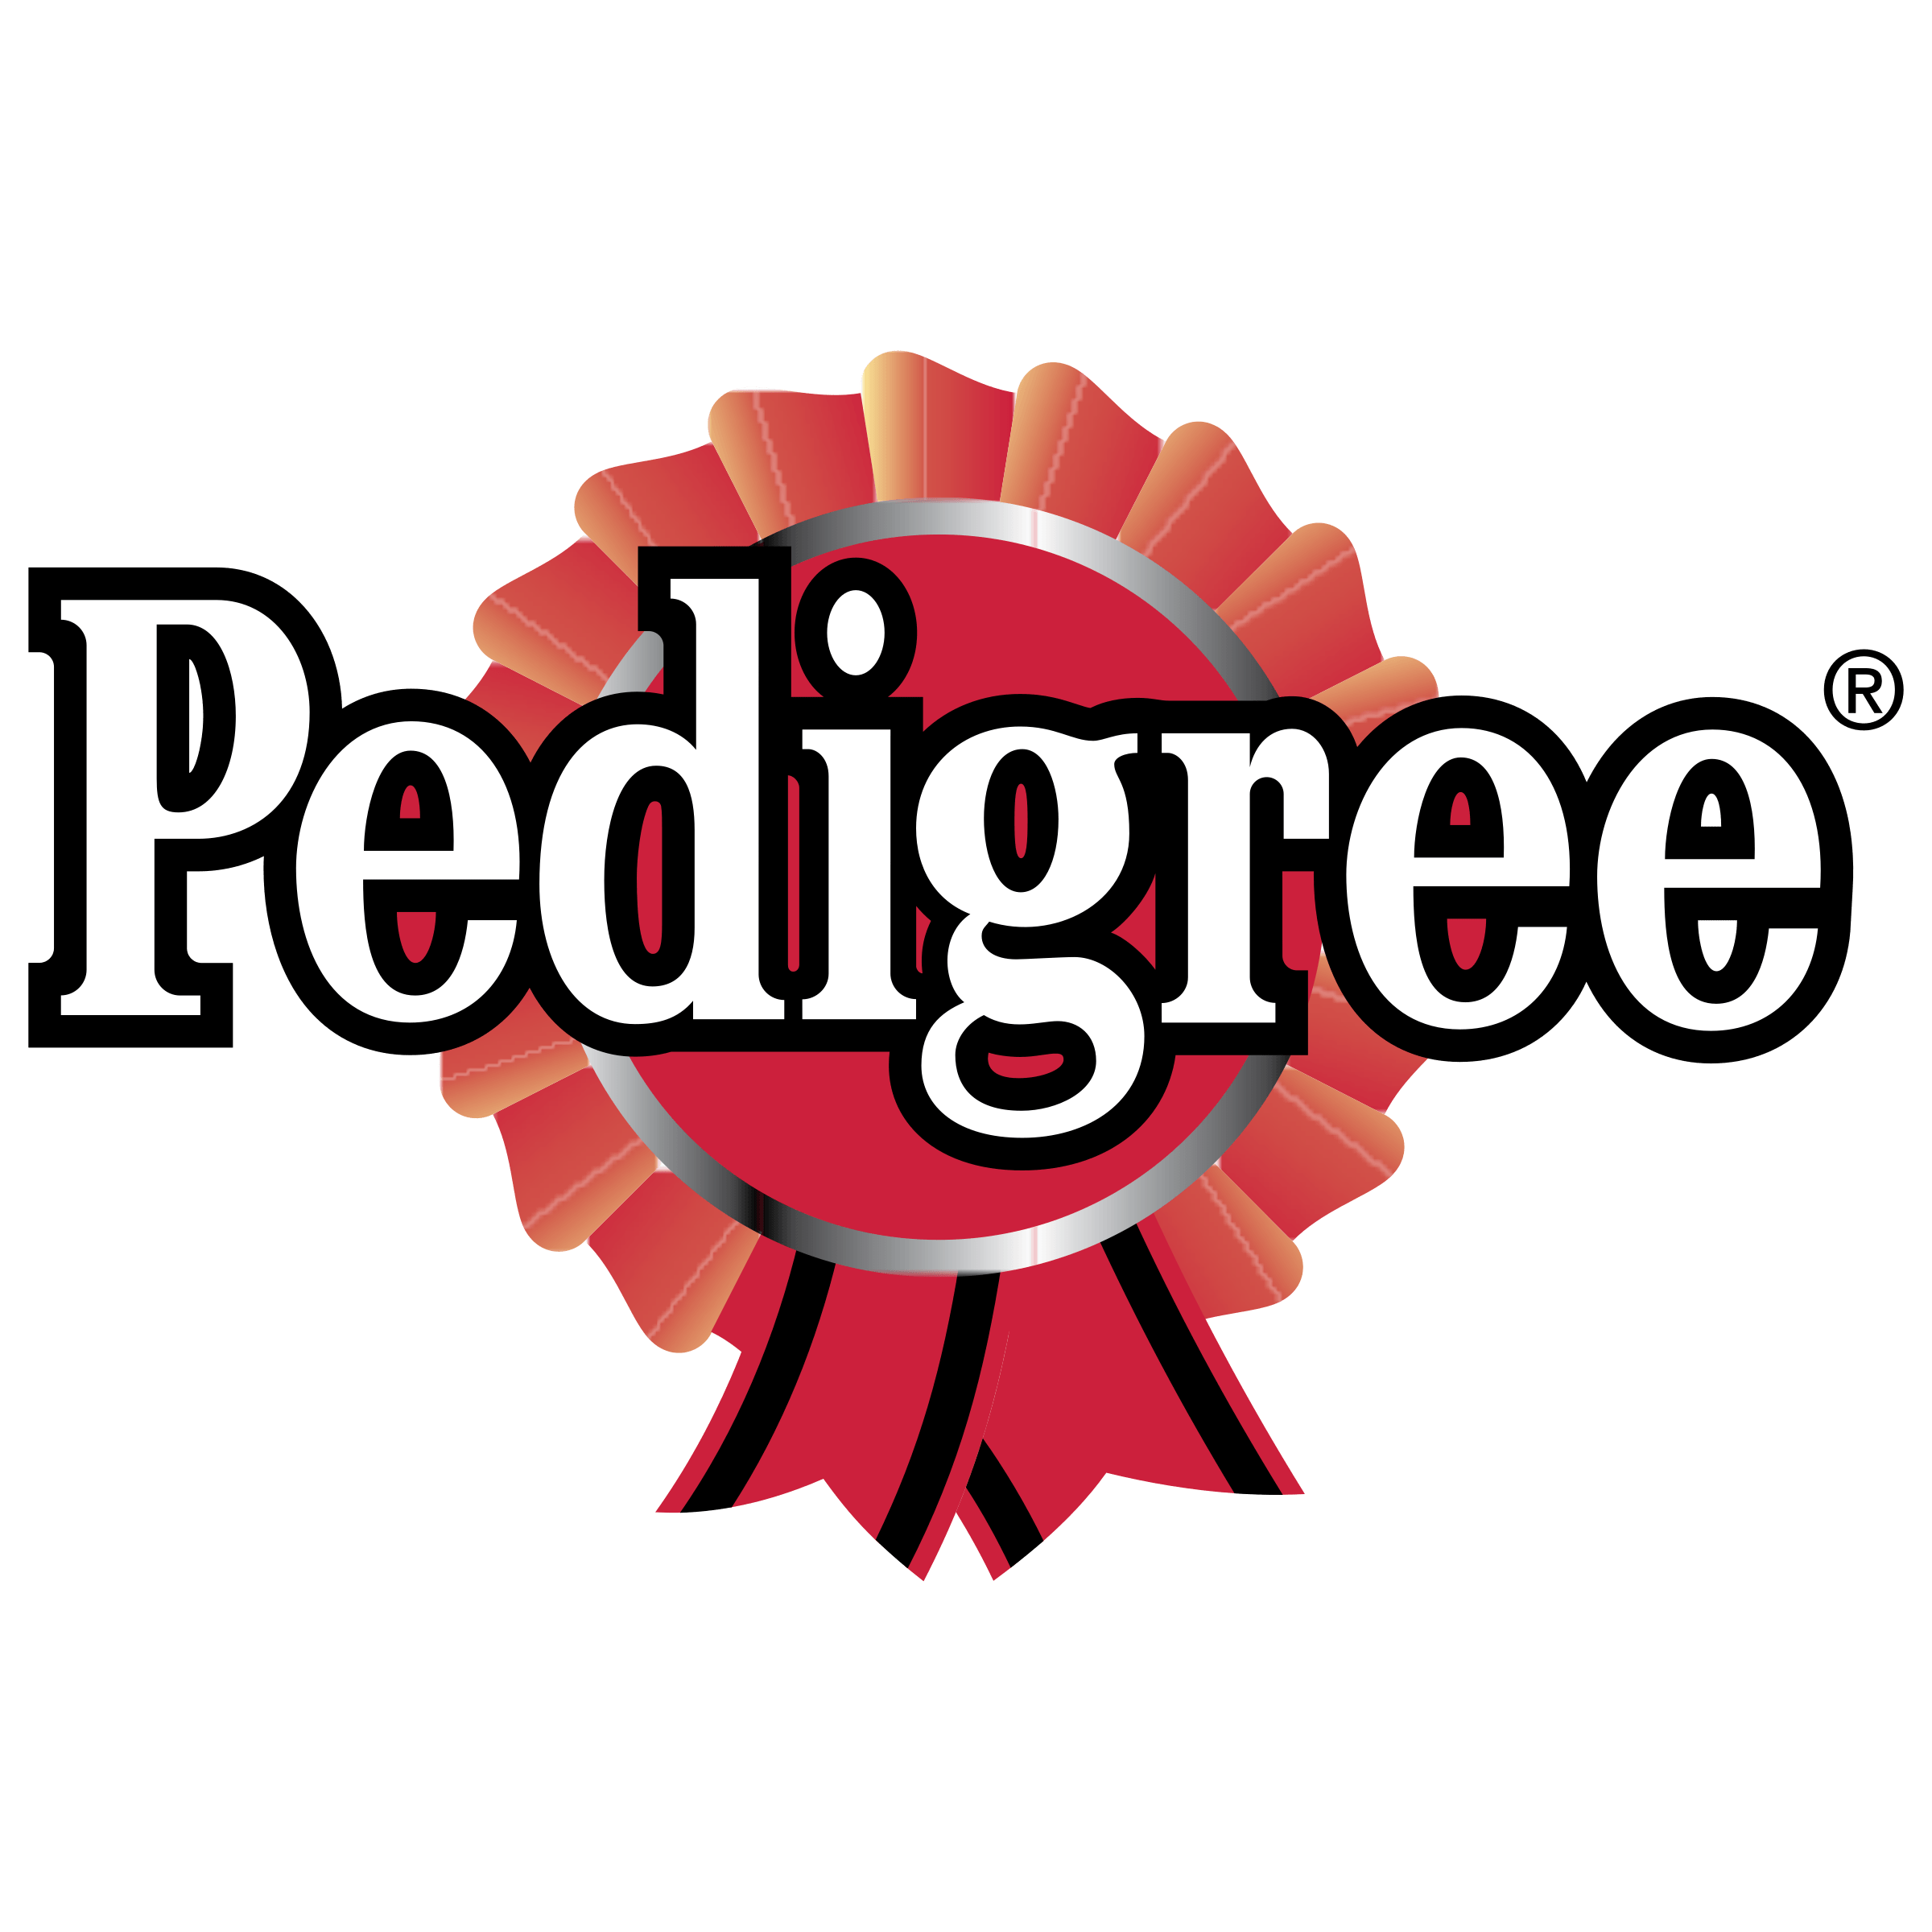 Pedigree Logo - Pedigree Logo PNG Transparent & SVG Vector - Freebie Supply